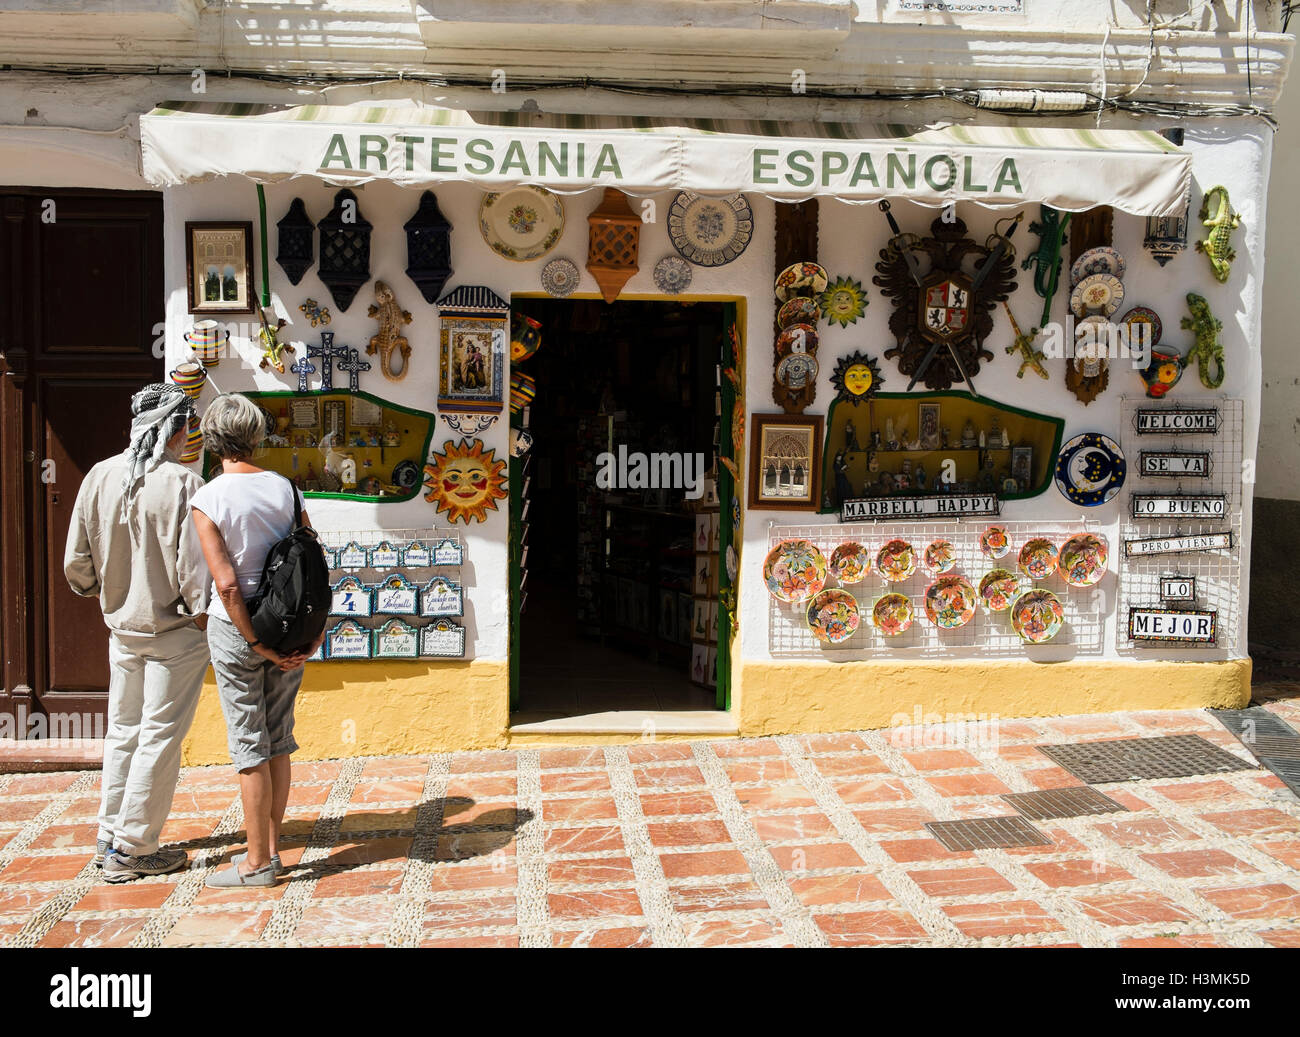 Artesanía española - Spanish handicraft. Marbella, Málaga, Spain Stock Photo